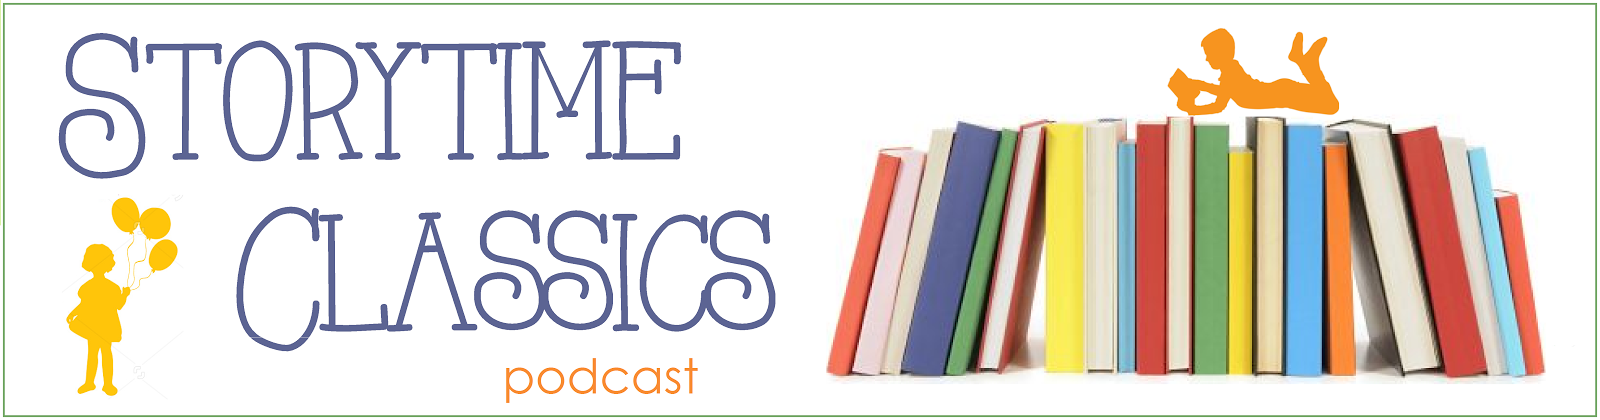 Storytime Classics Podcast